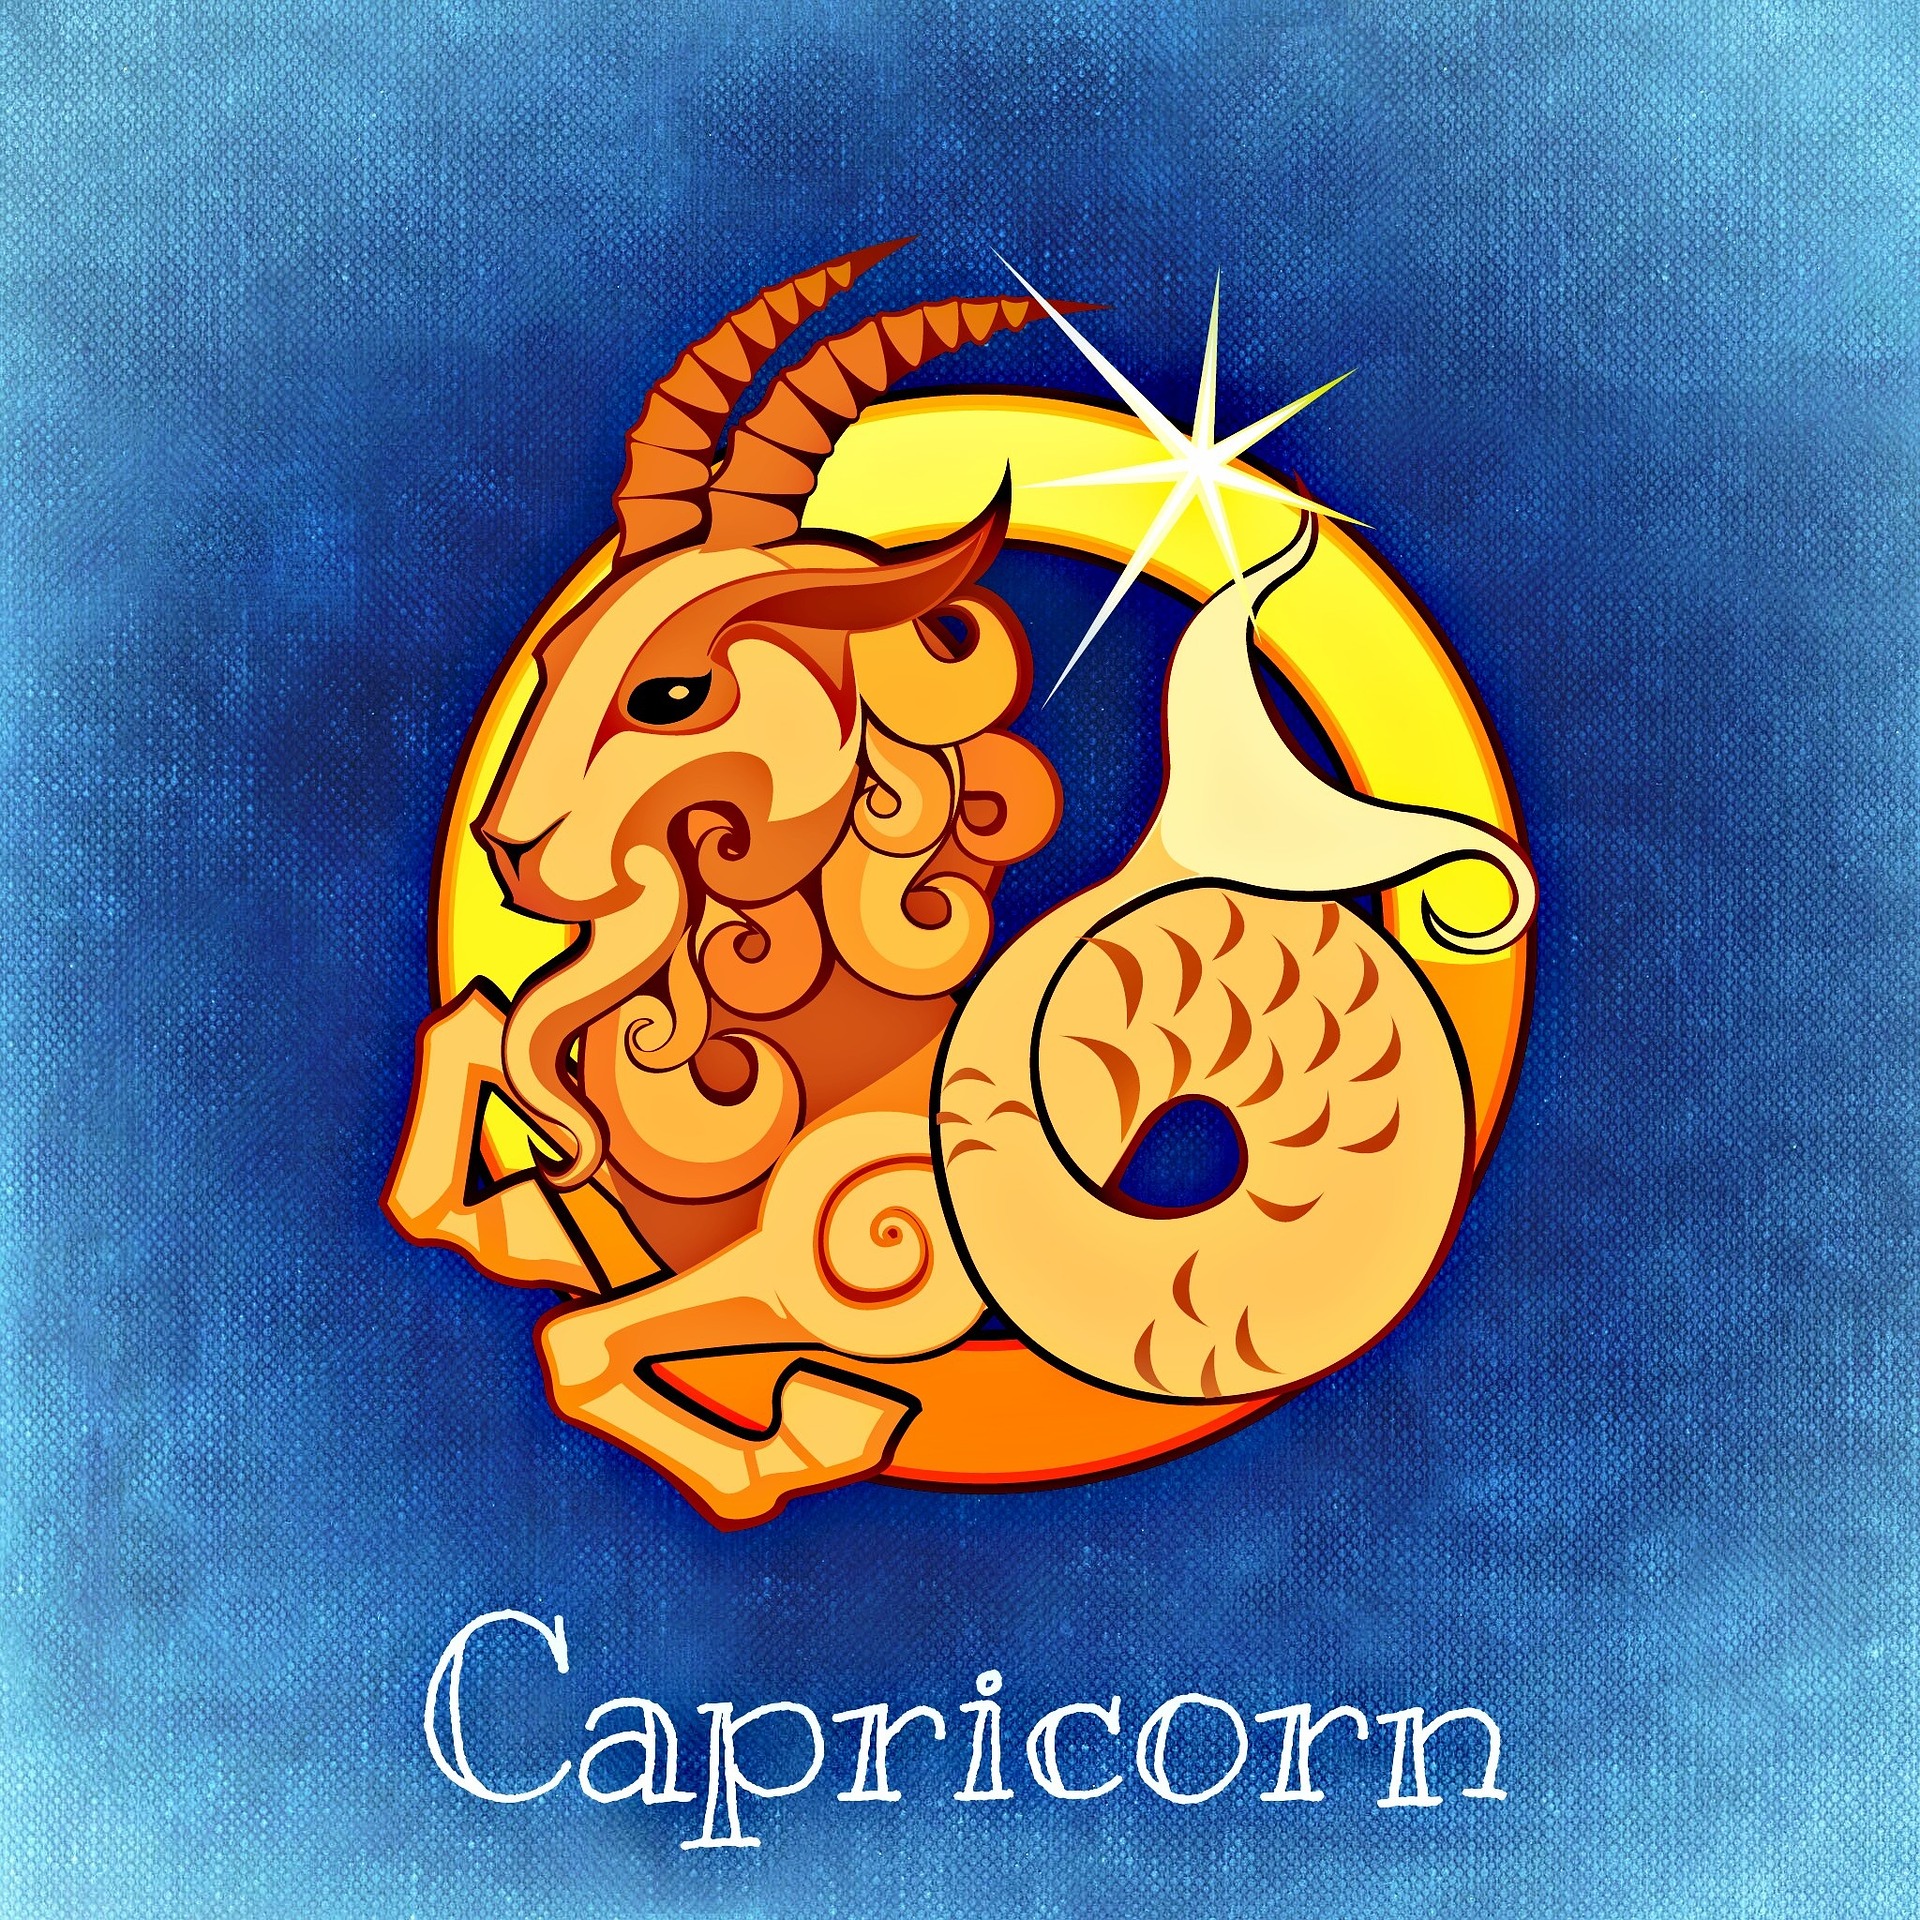 born under Capricorn sign